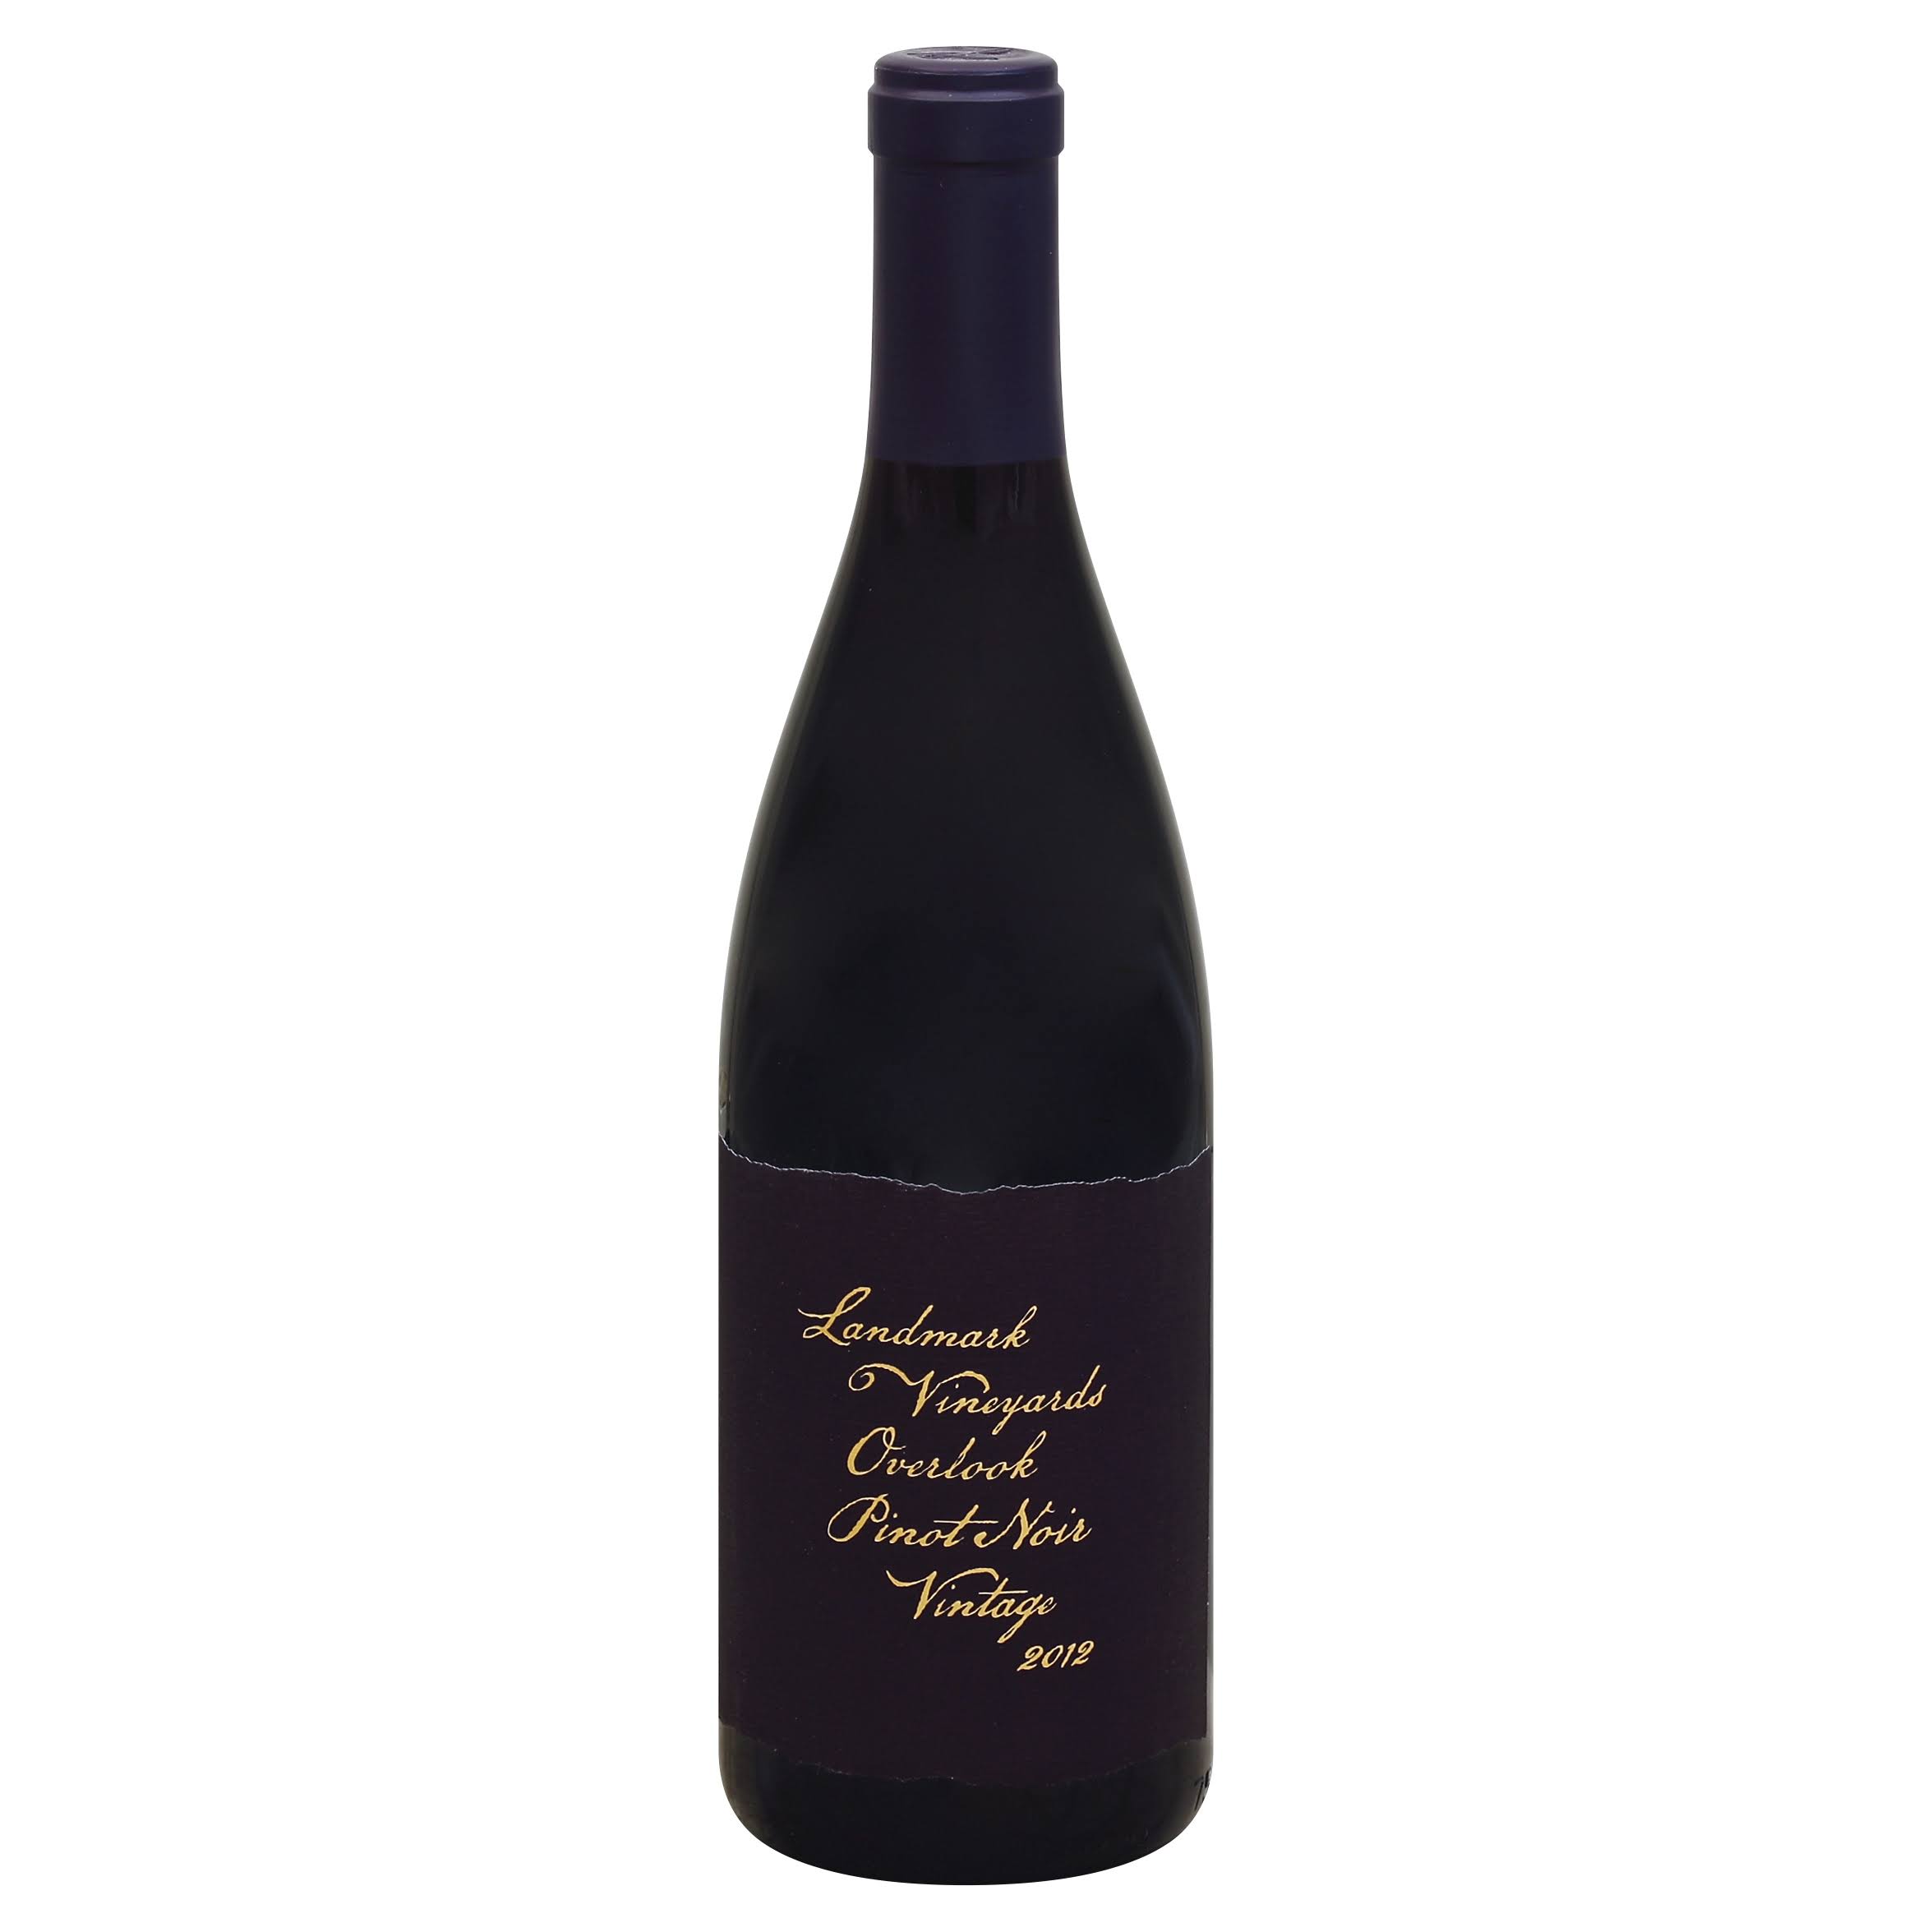 Landmark Pinot Noir Overlook Red Wine - 2015, California USA